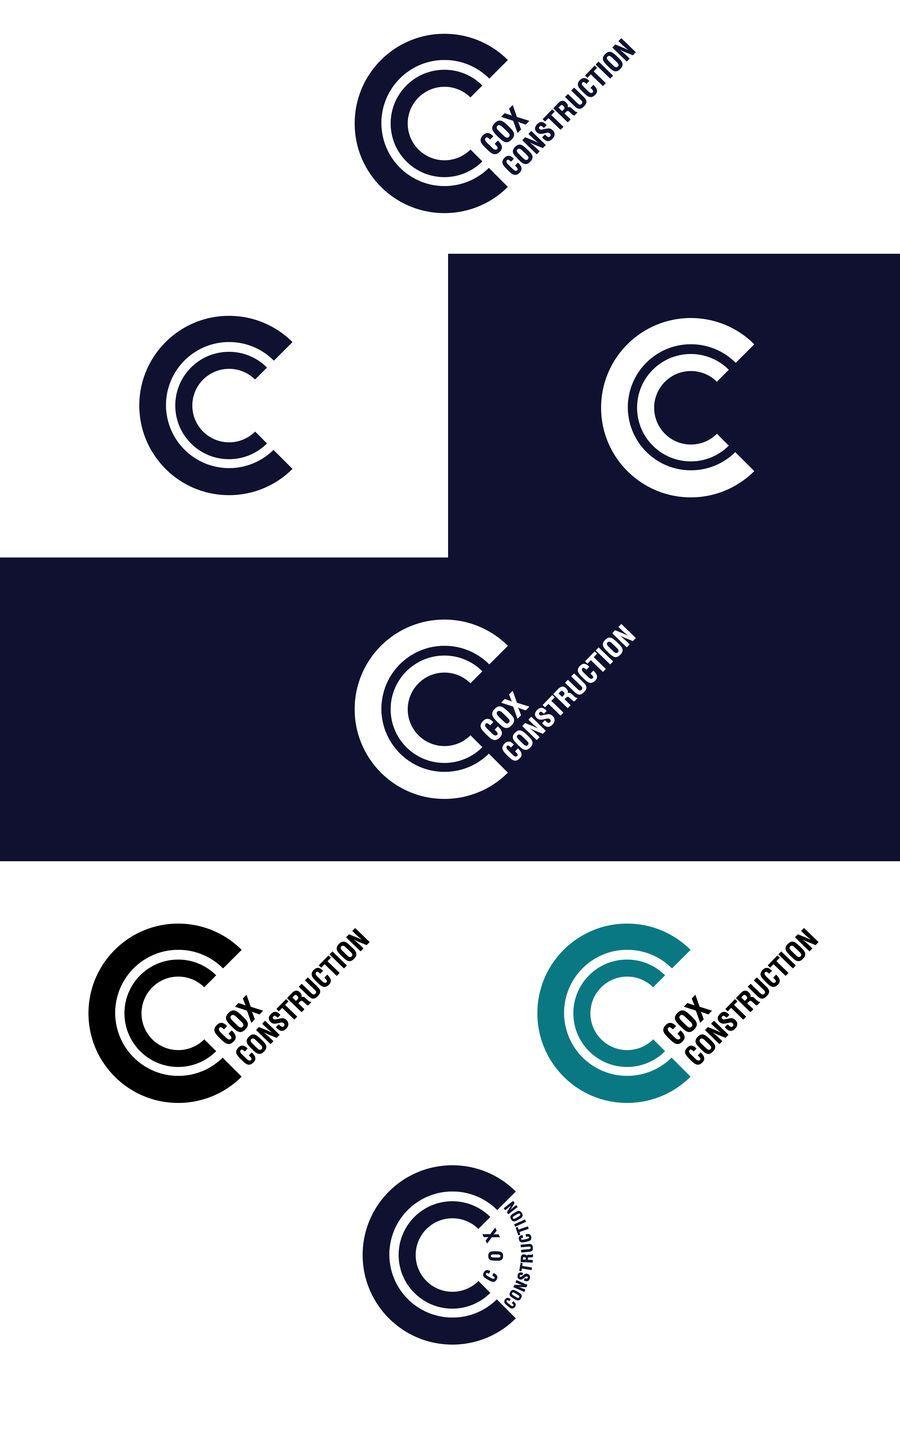 CC Company Logo - Entry #217 by williamfarhat for CC logo for construction company ...